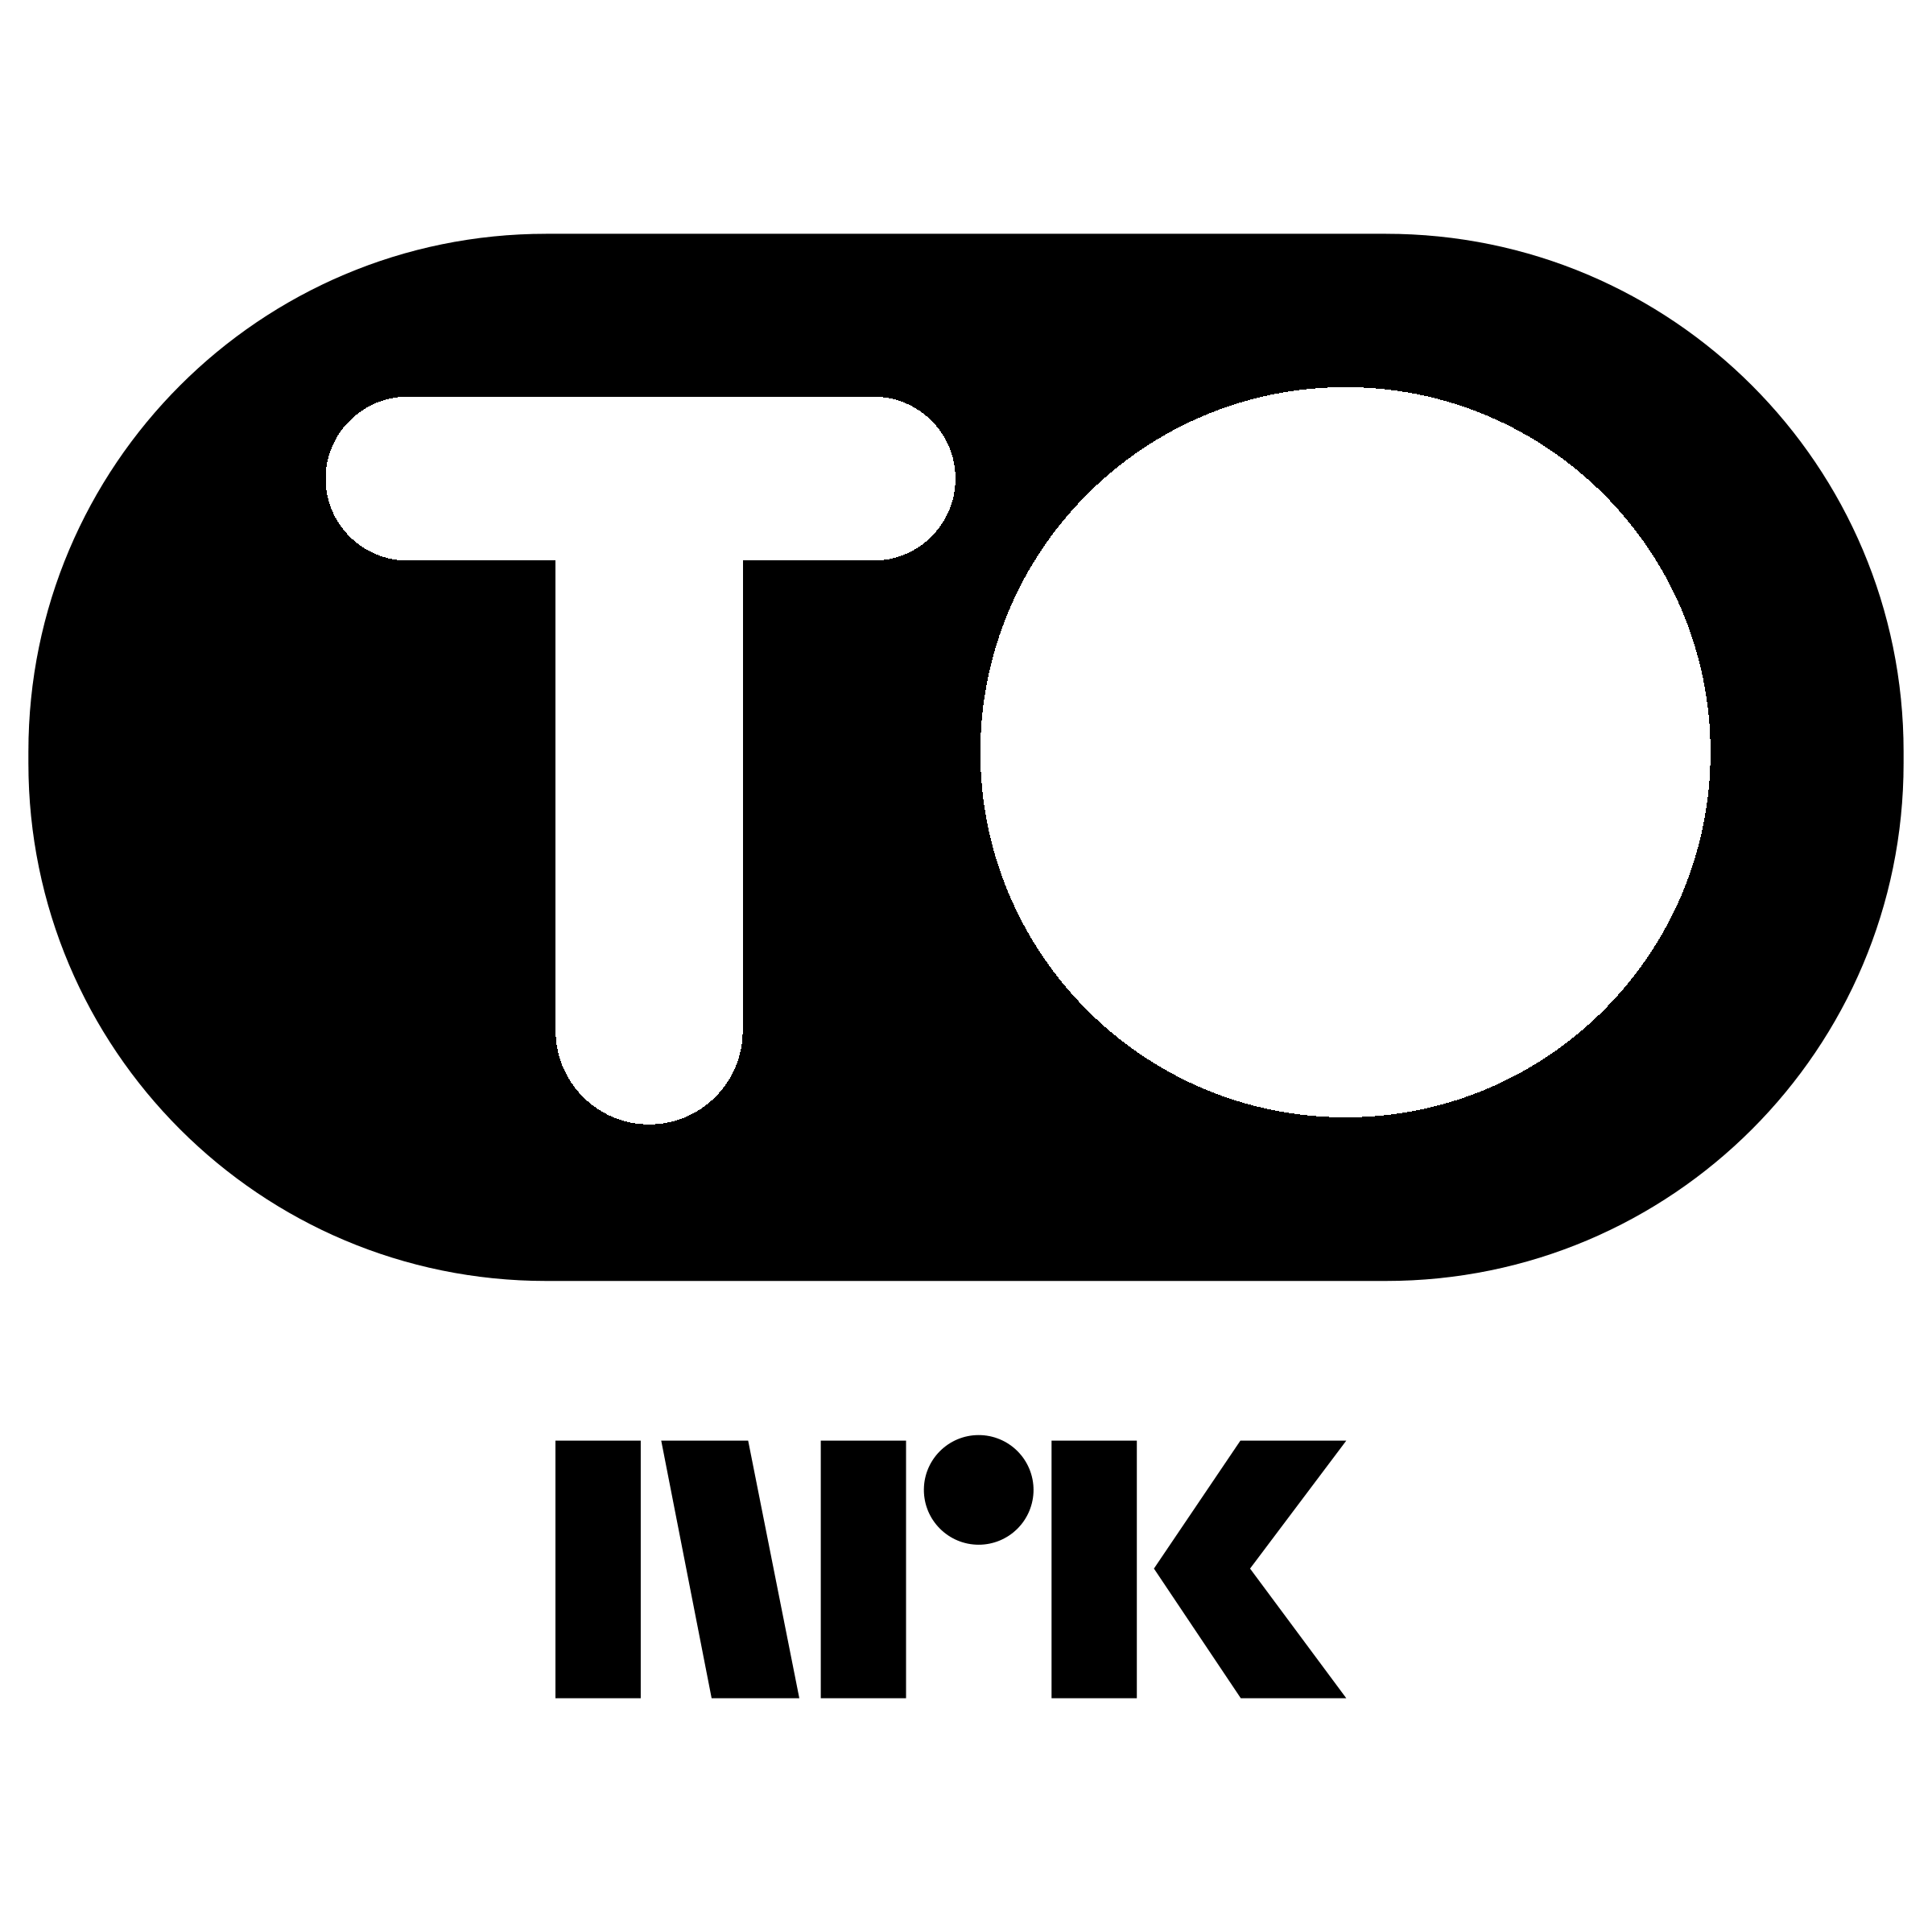 T O Logo - NRK TO Logo PNG Transparent & SVG Vector - Freebie Supply